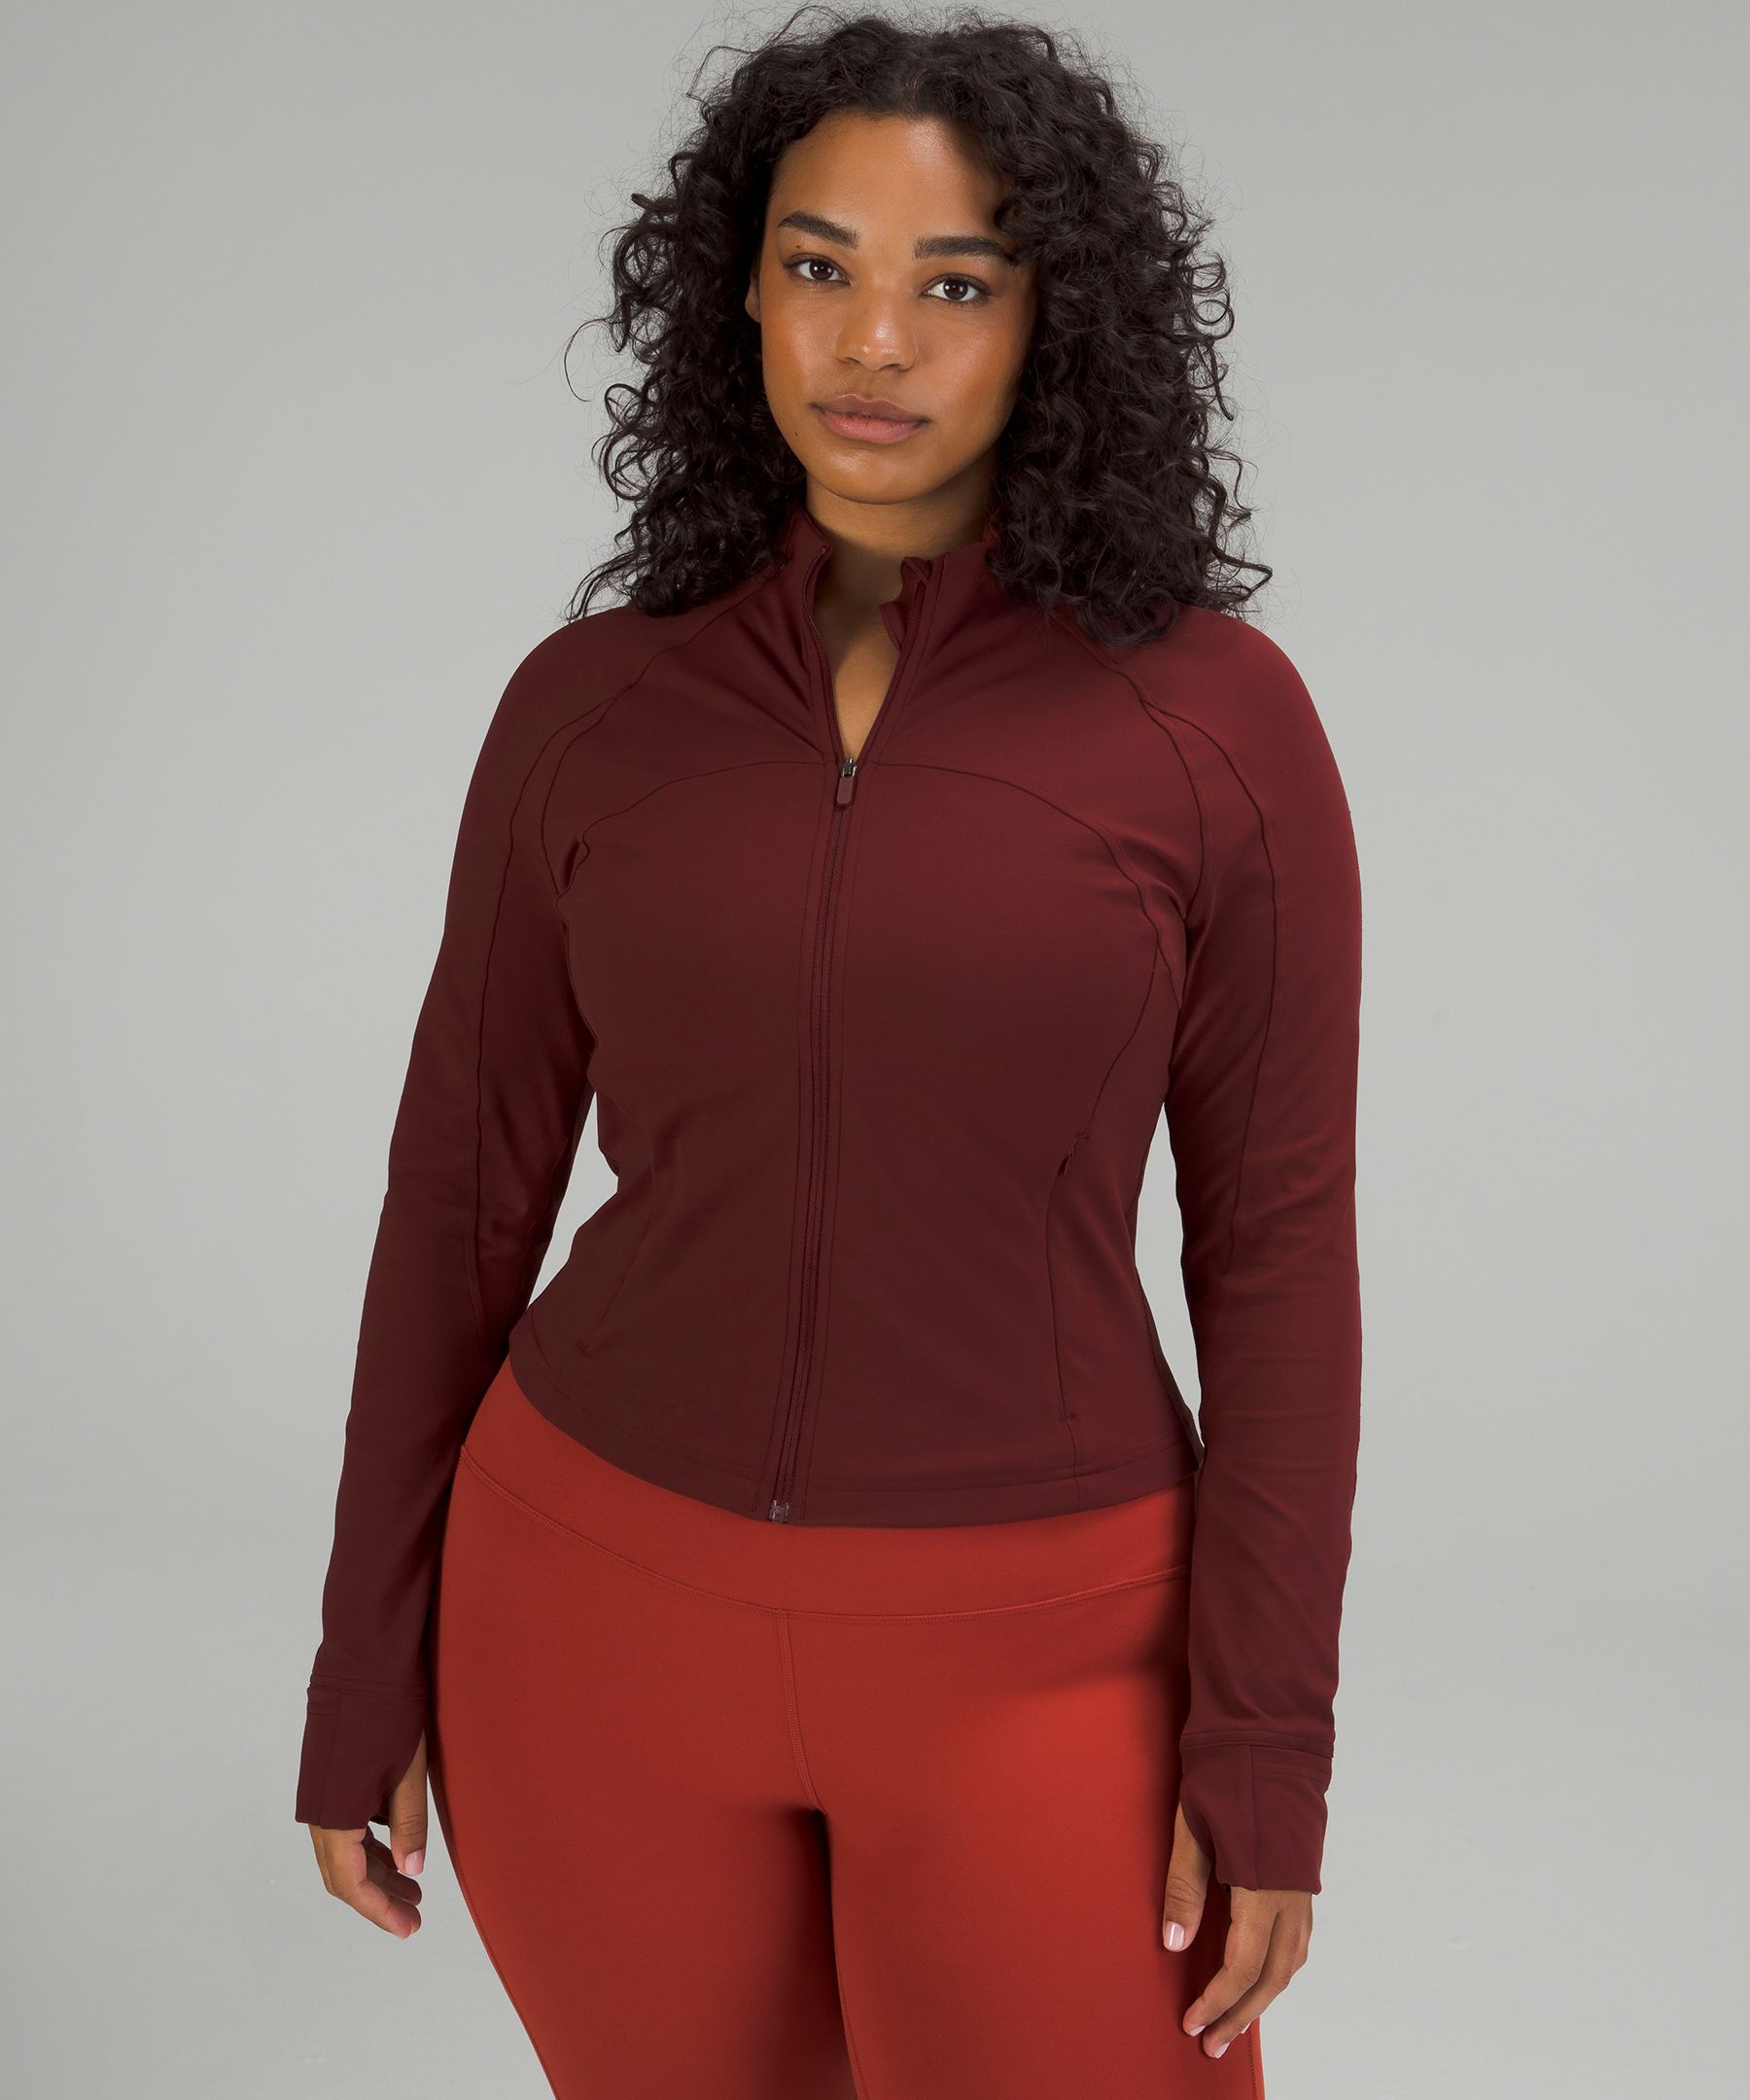 Nulu Cropped Define Jacket Women's Hoodies Sweatshirts, 46% OFF